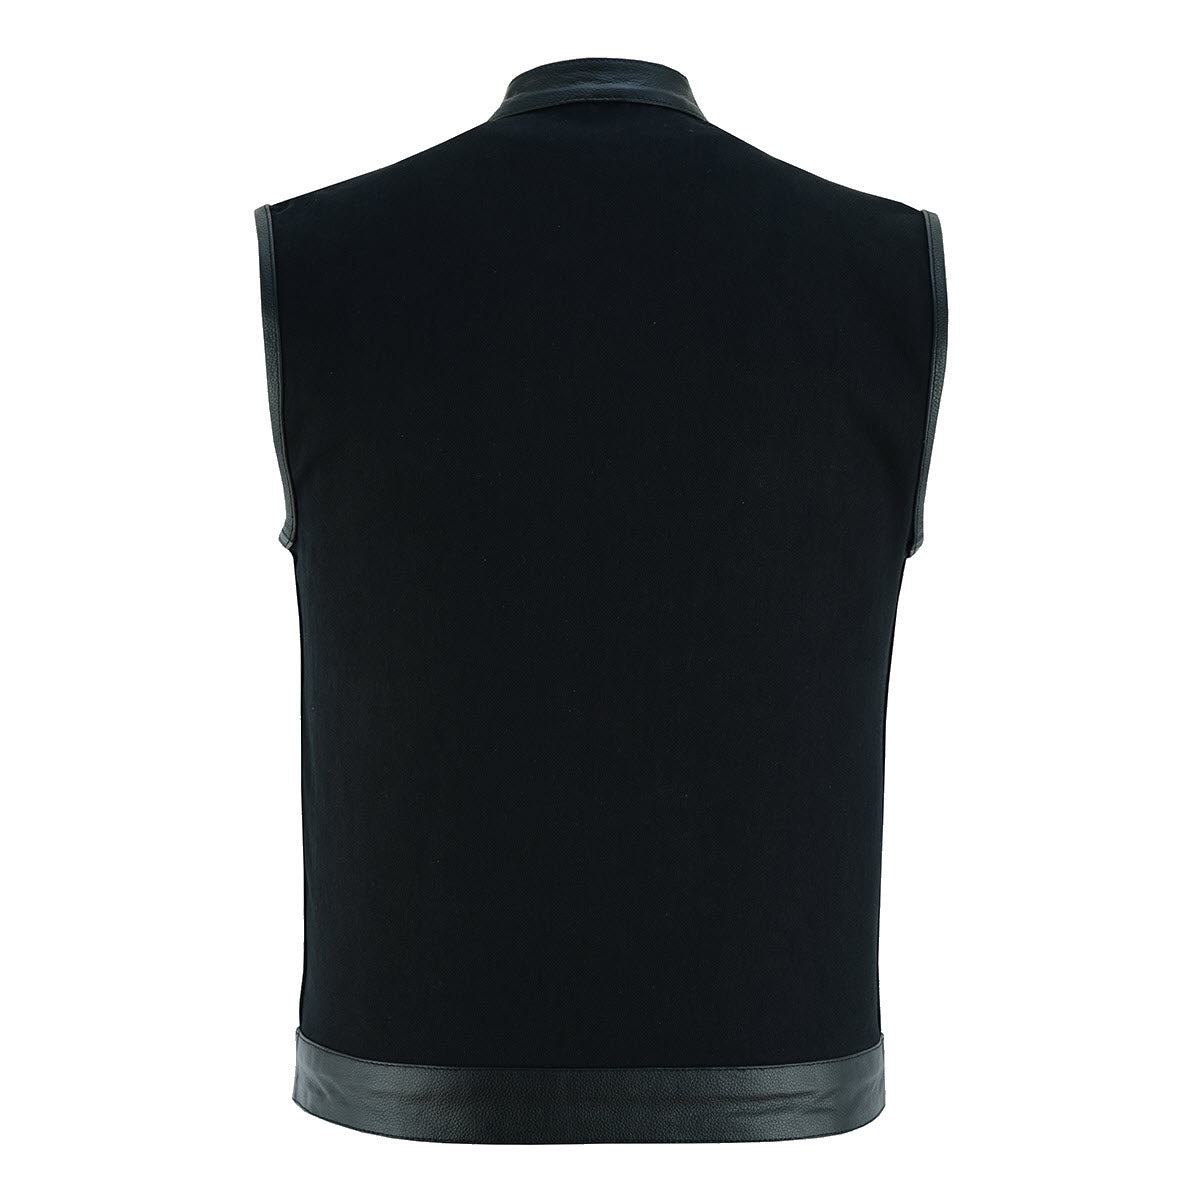 Vance Leather Black Denim Club Vest w/Leather Trims